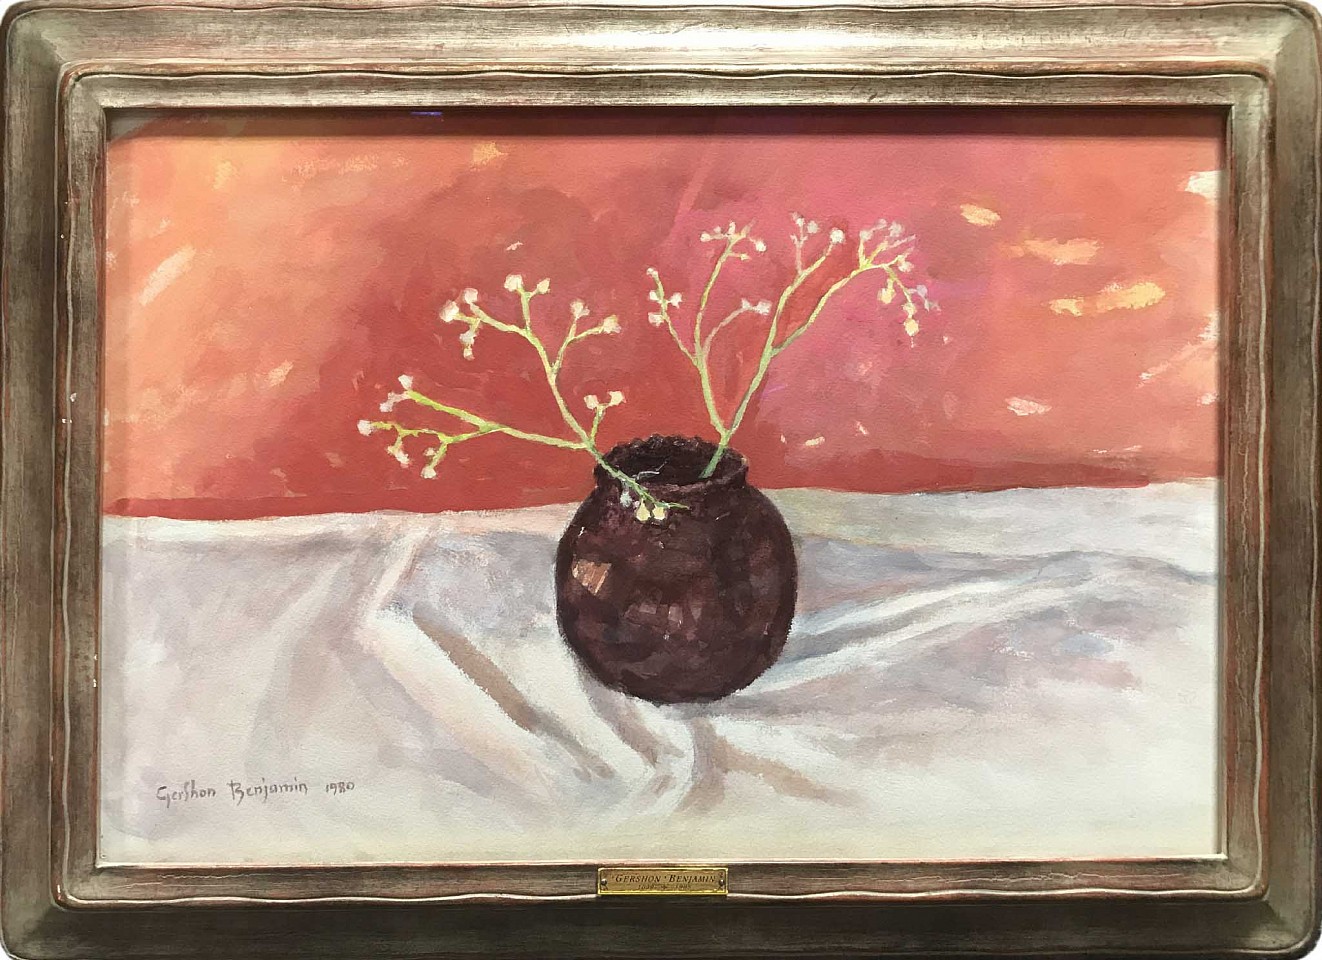 Gershon Benjamin, Weed Berries, 1980
watercolor on paper, 15 x 22 in. (38.1 x 55.9 cm)
GB1803013